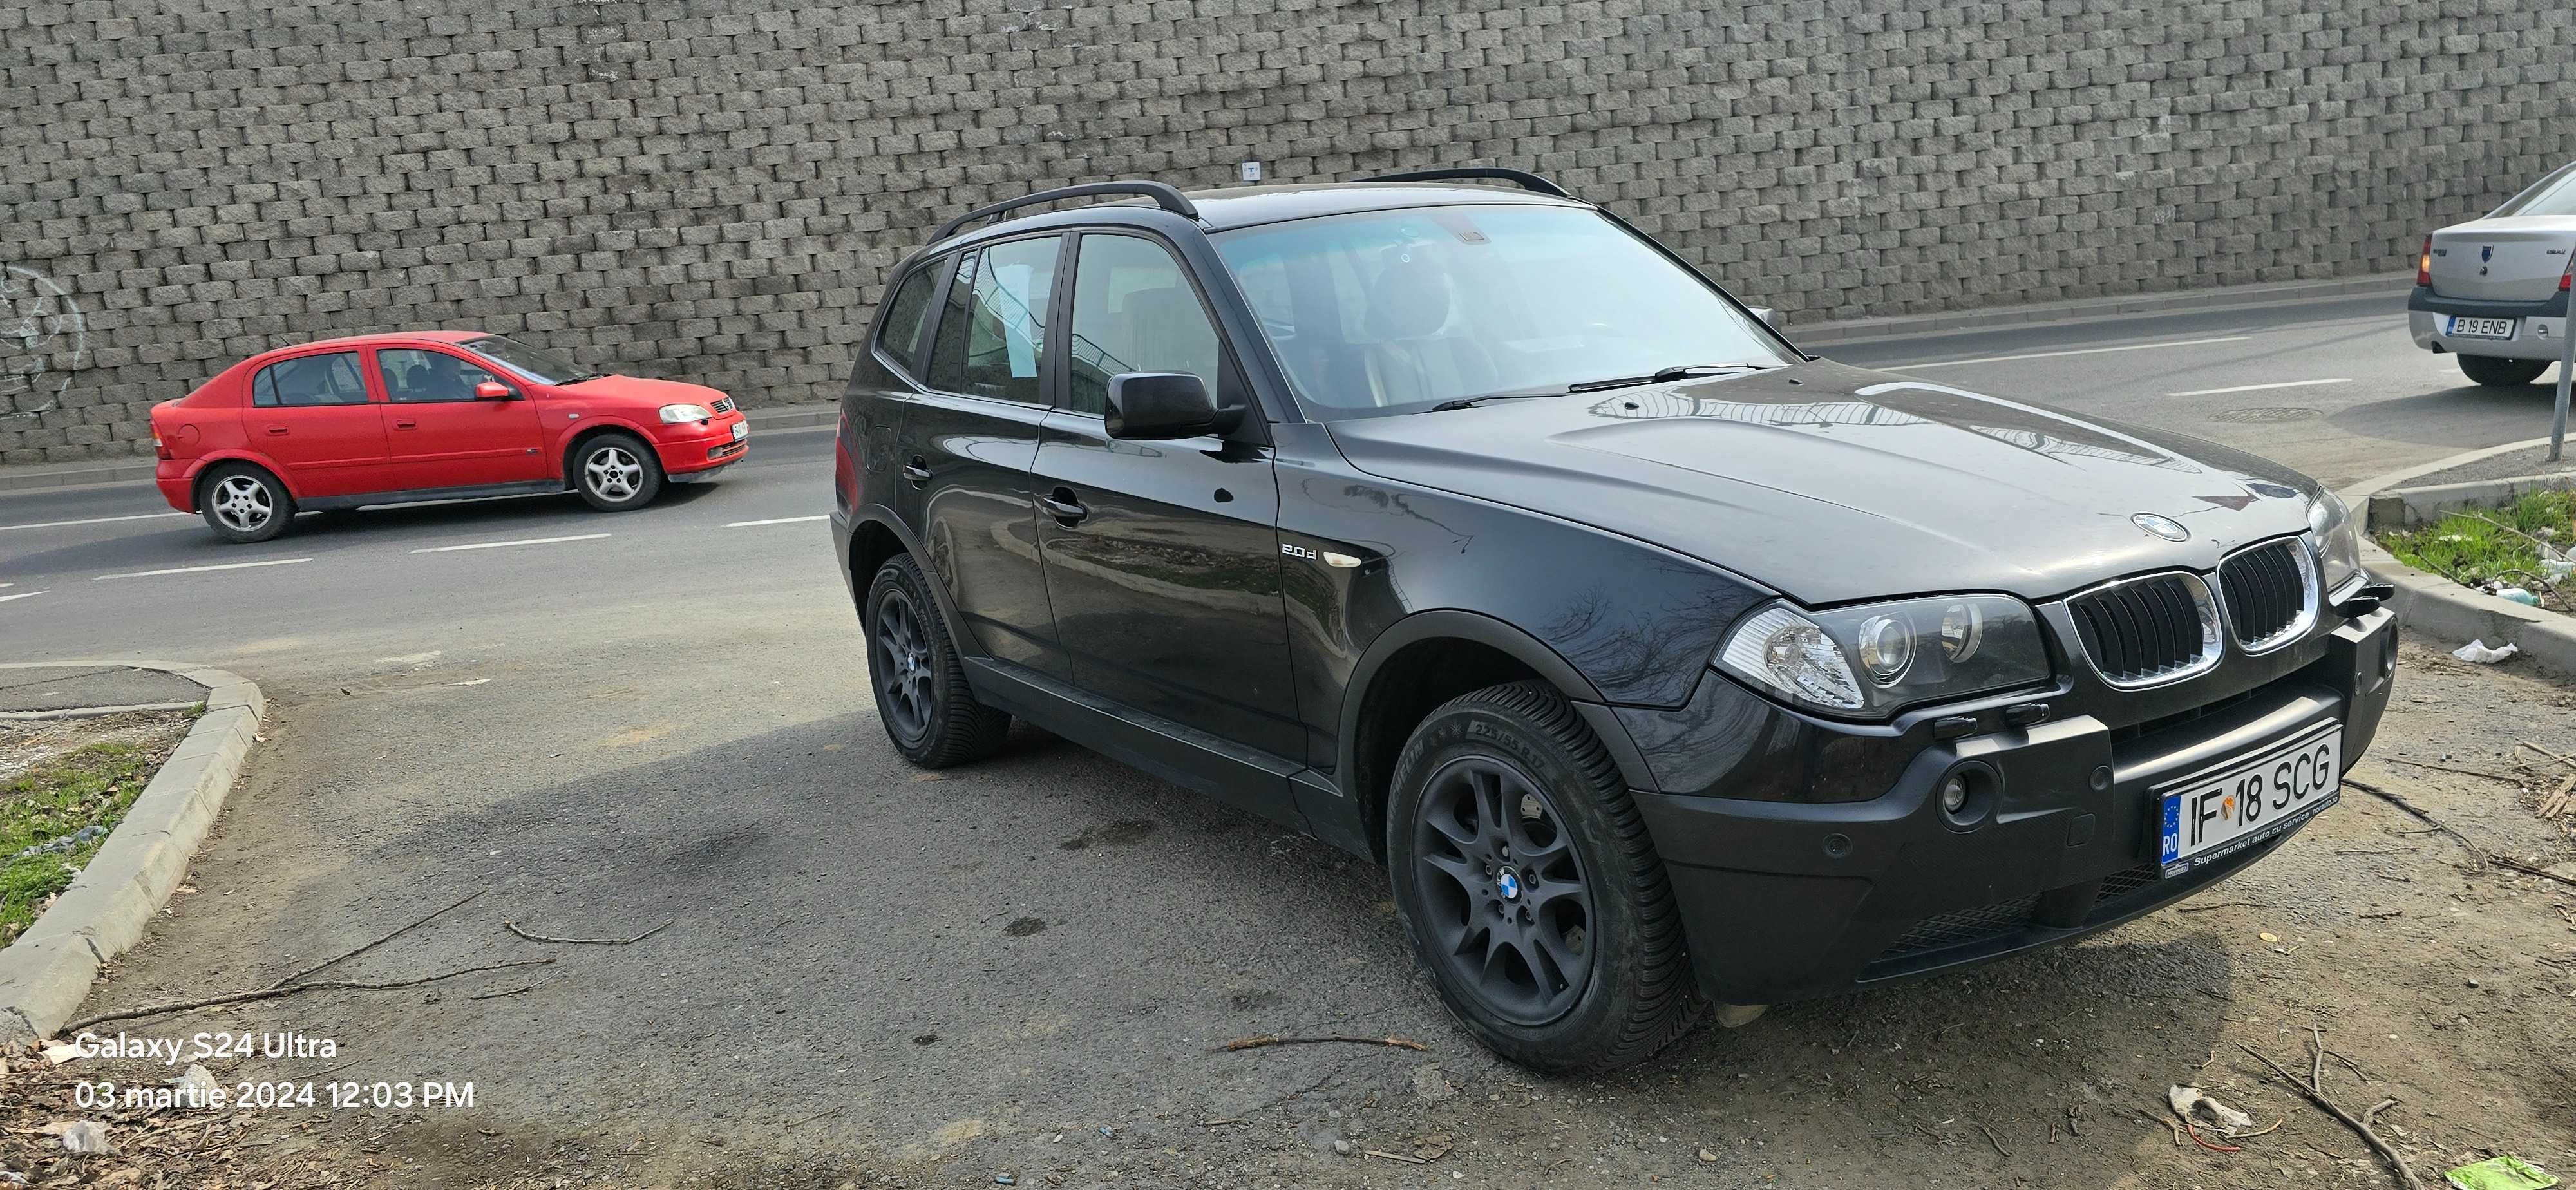 Vând BMW X3 E83 AN 2007